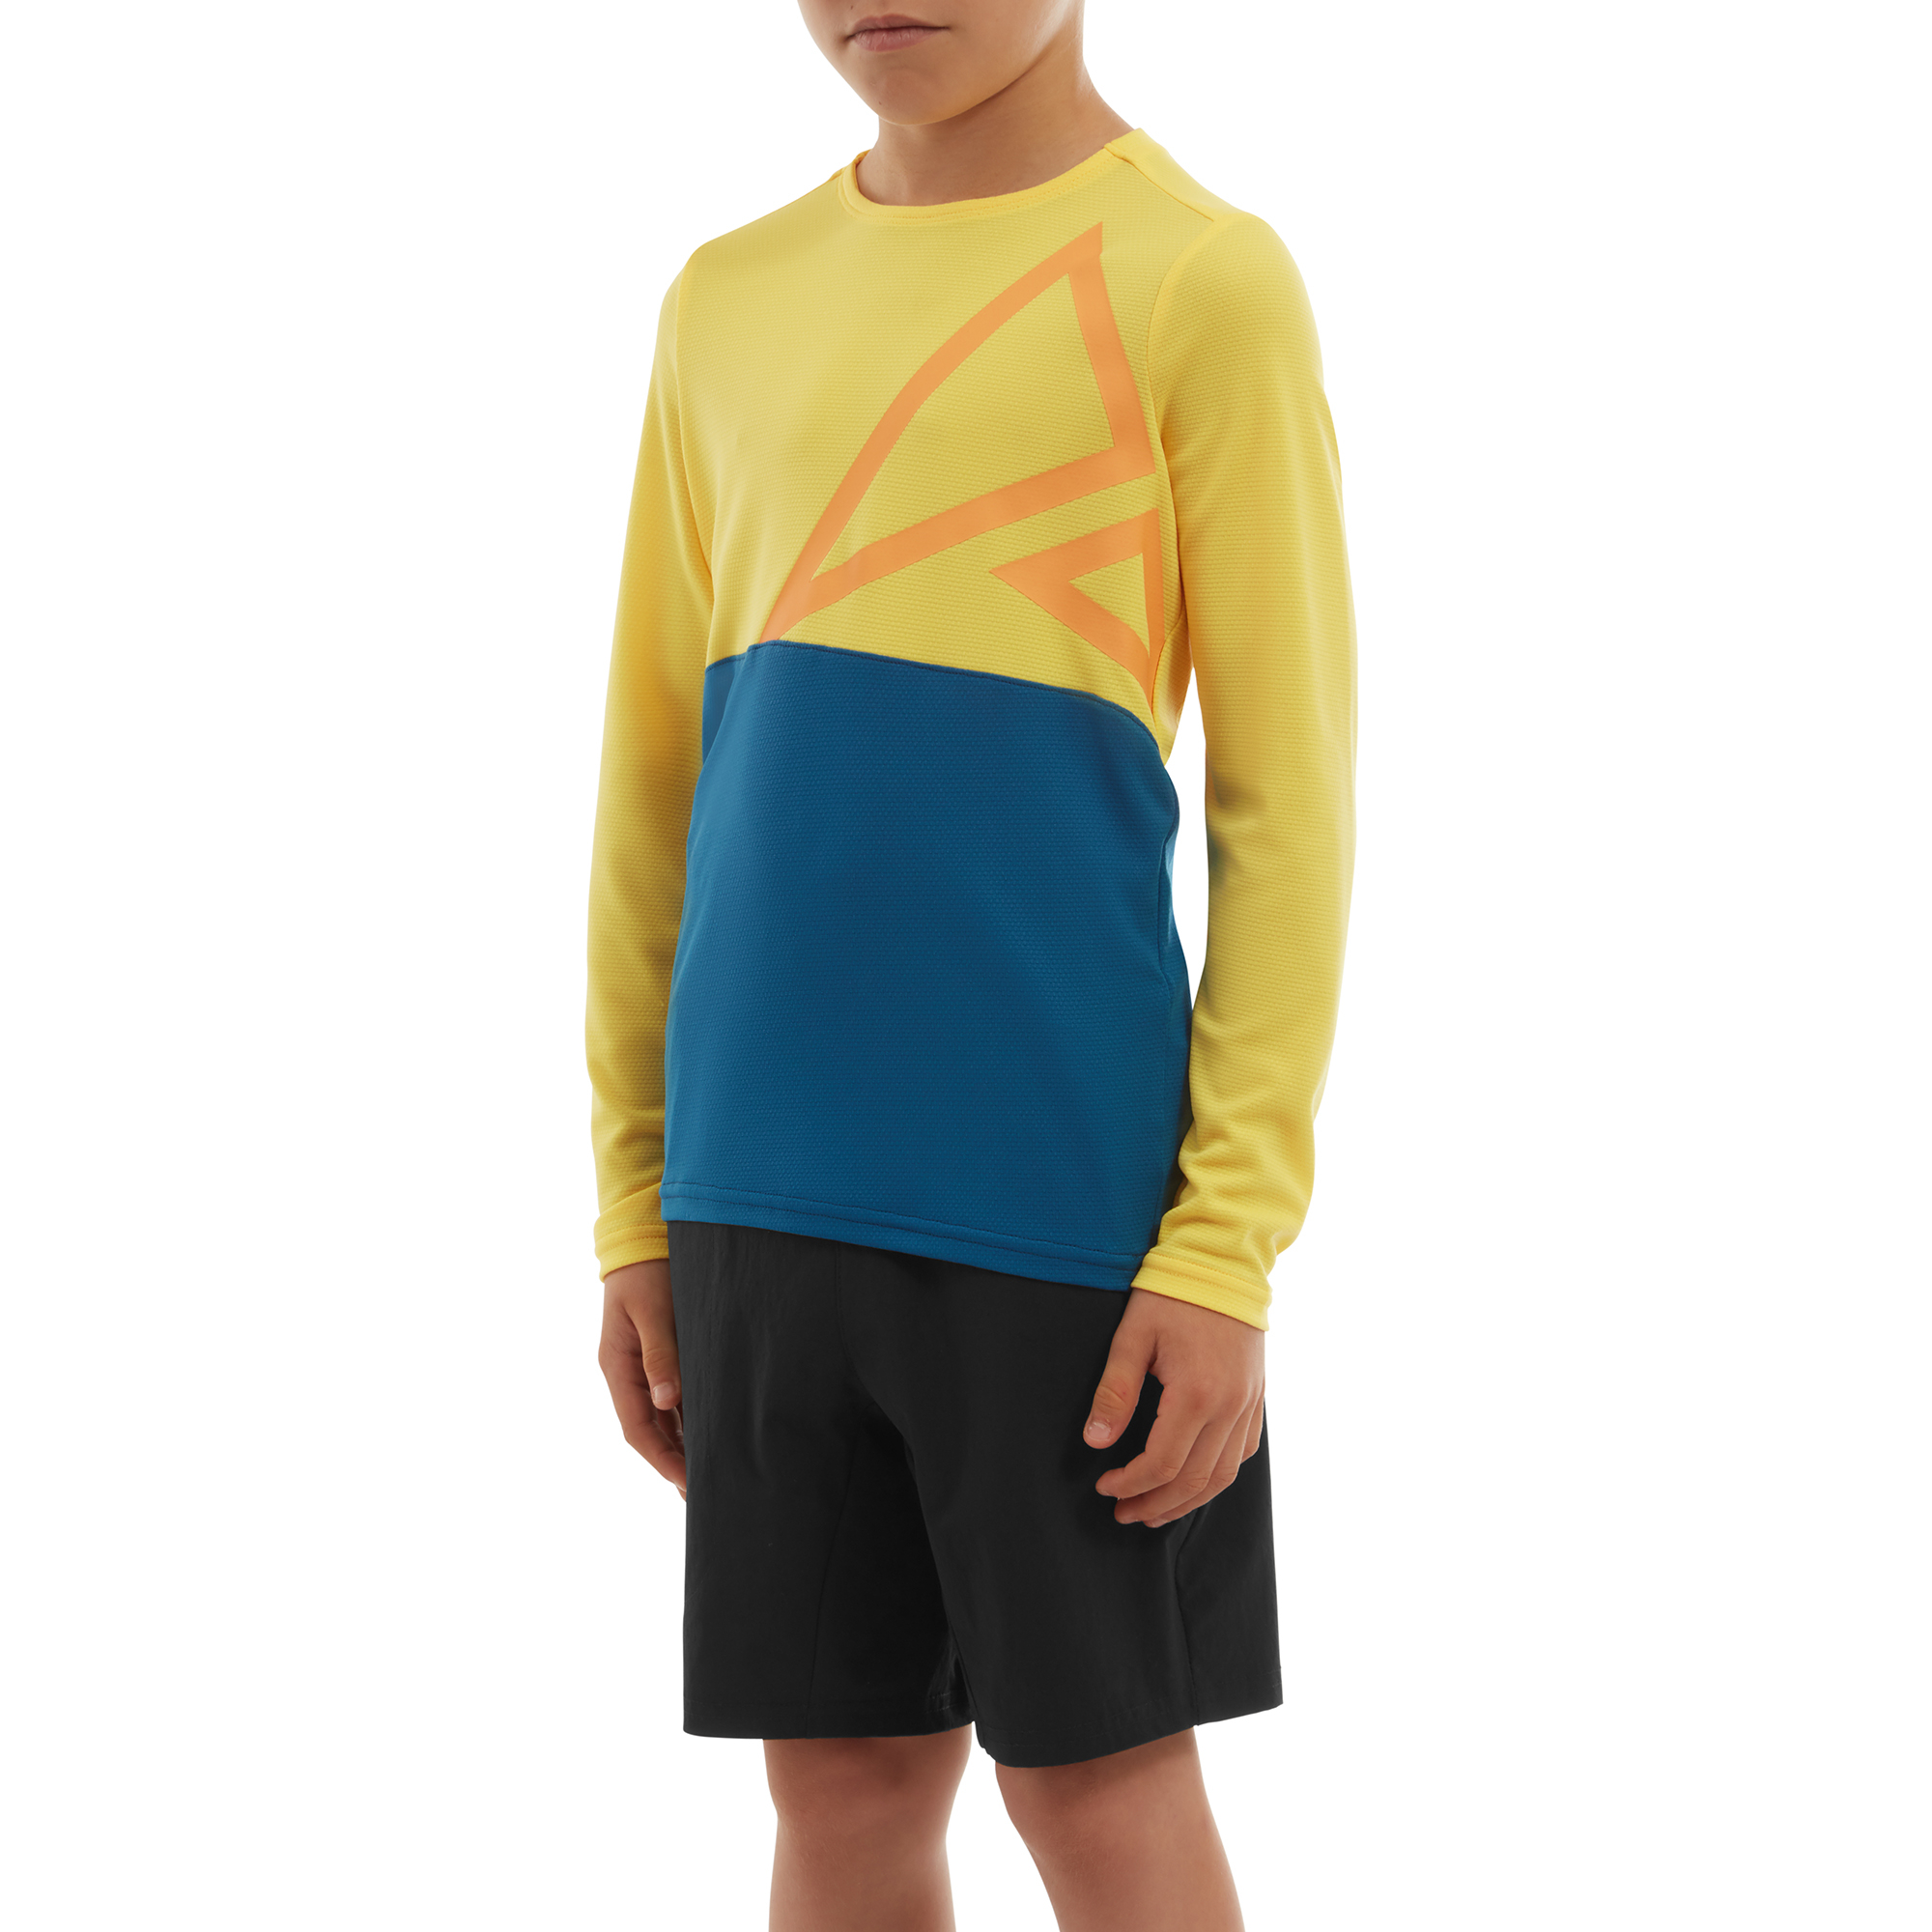 Altura  Spark Lightweight Kids Long Sleeve Jersey 5 to 6 Years YELLOW/BLUE